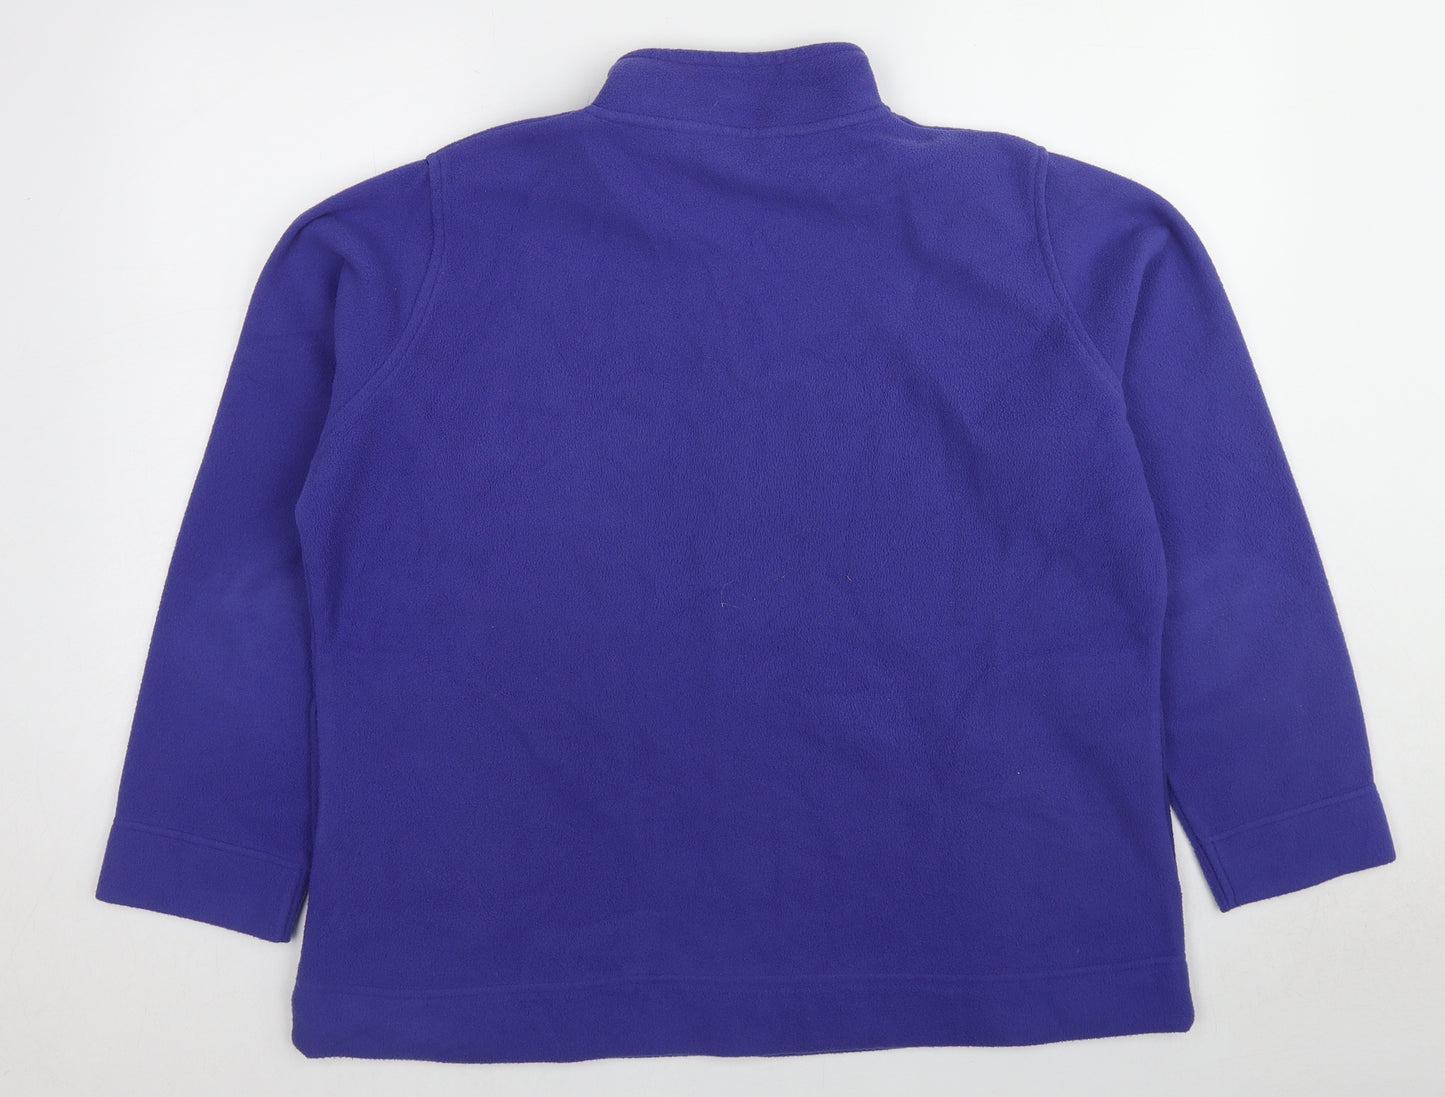 EWM Womens Purple Jacket Size 22 Zip - Size 22-24